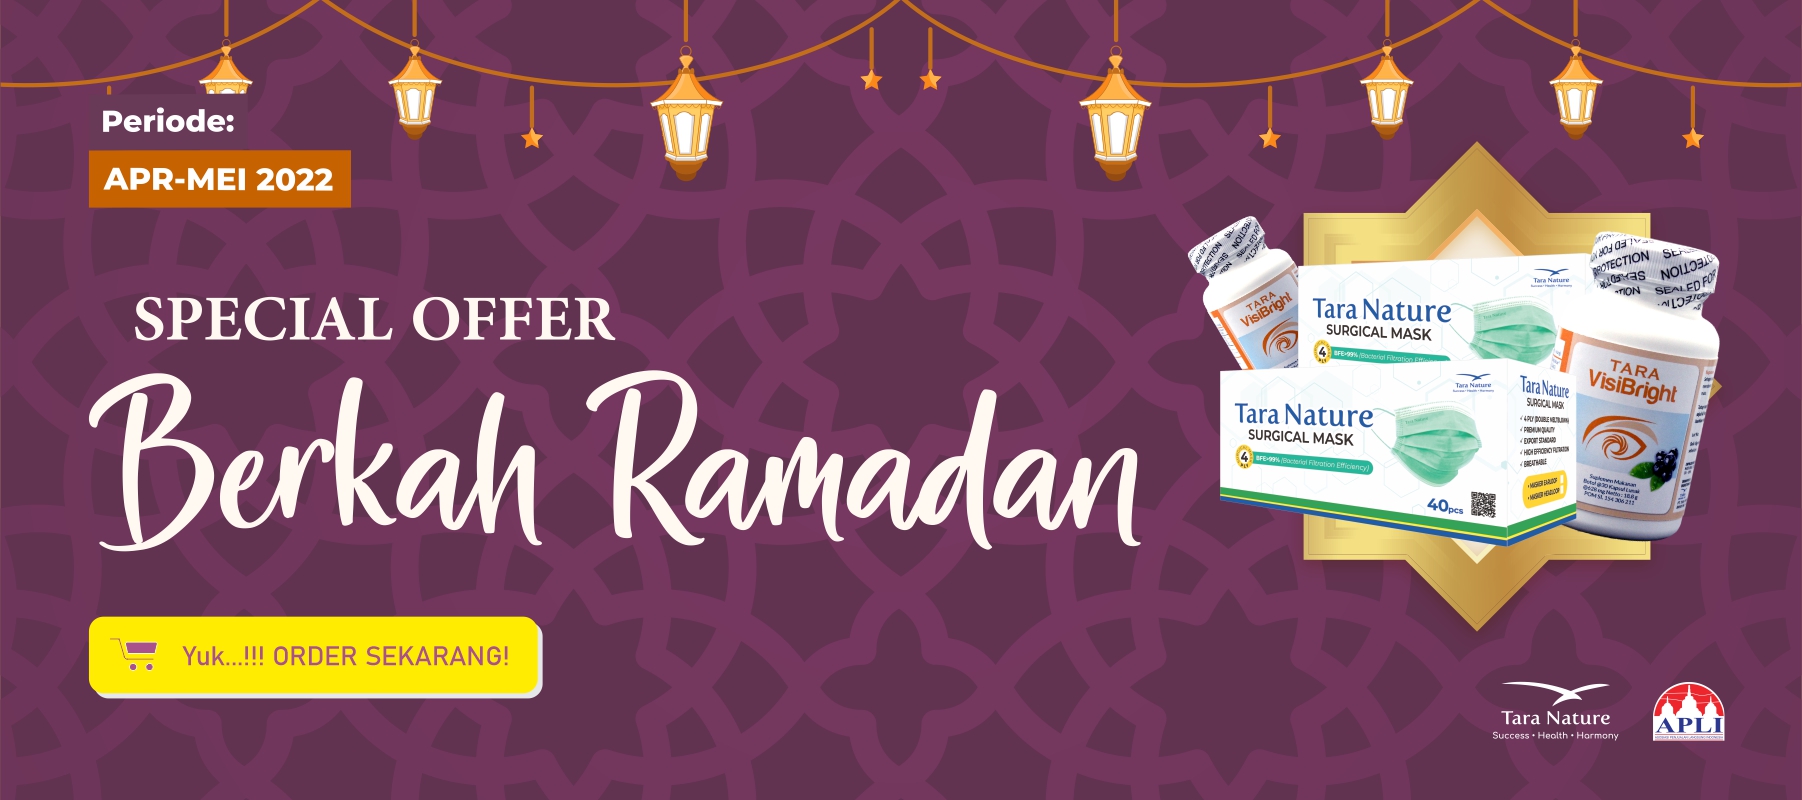 Special offer berkah ramadan mobile